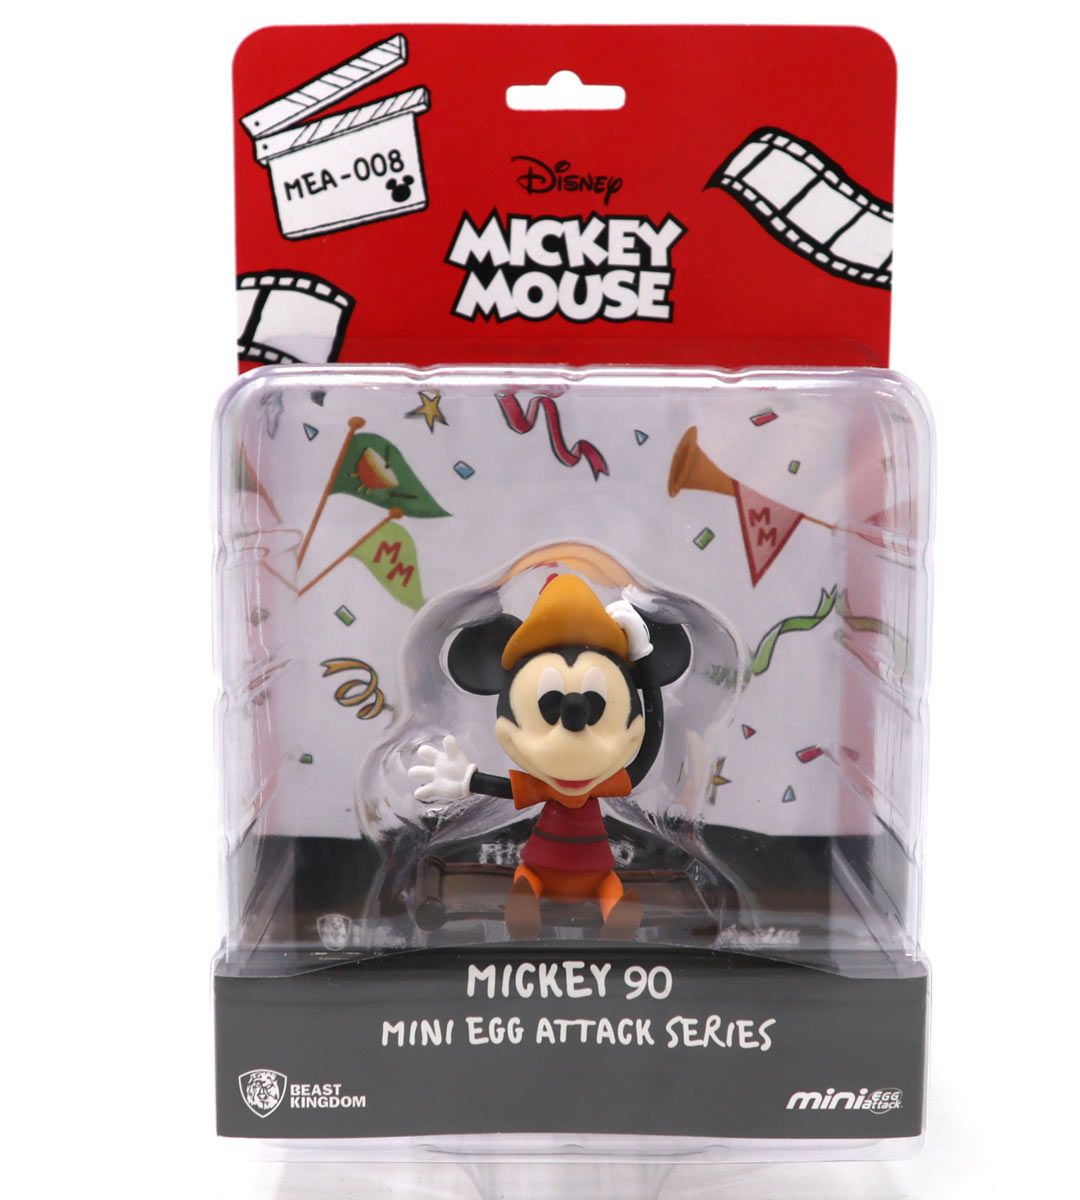 Mini Egg Attack Series - Robinhood Mickey 90 (Mickey Mouse)